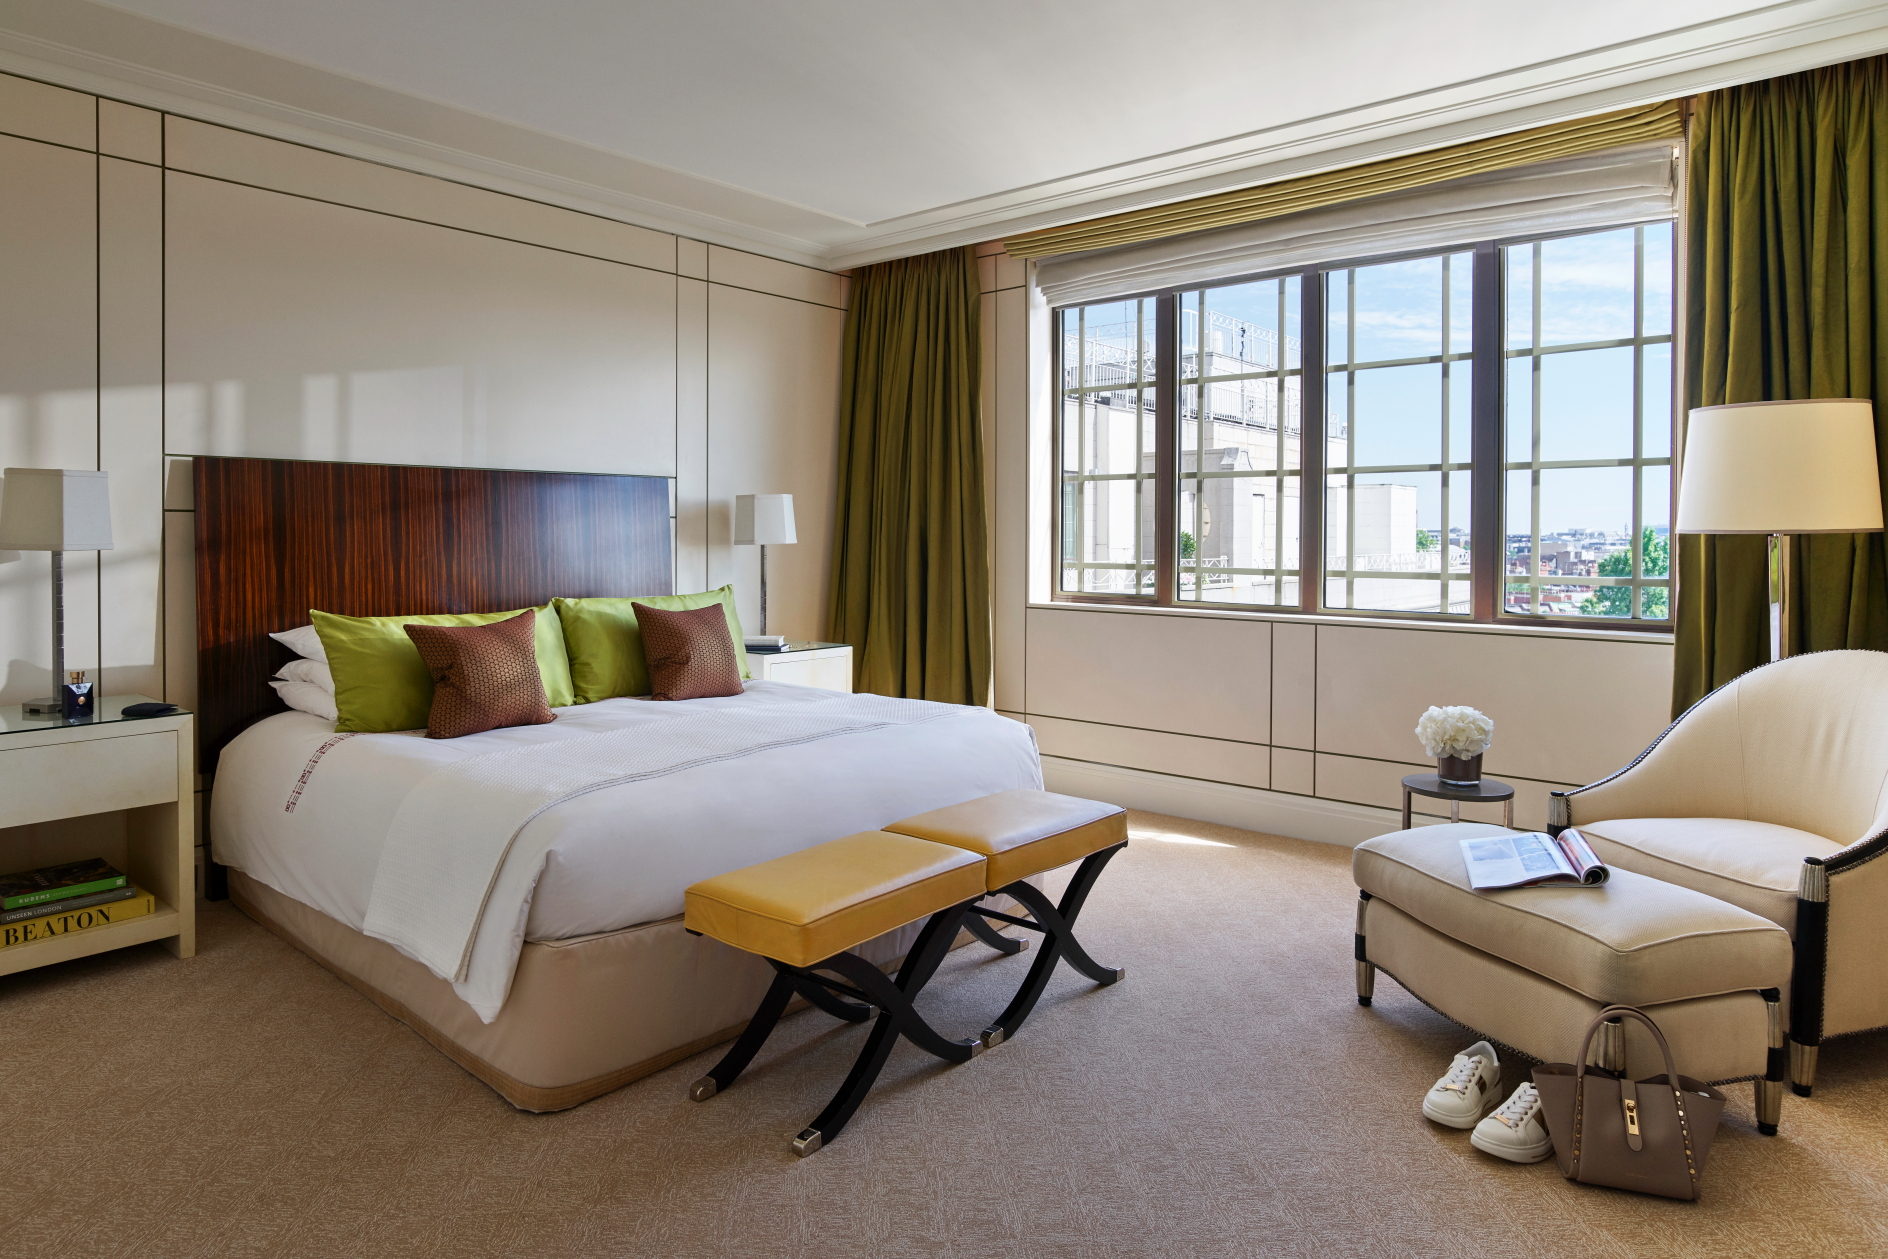 Elizabeth Taylor Harlequin Suite at The Dorchester hotel in London. Click to enlarge.